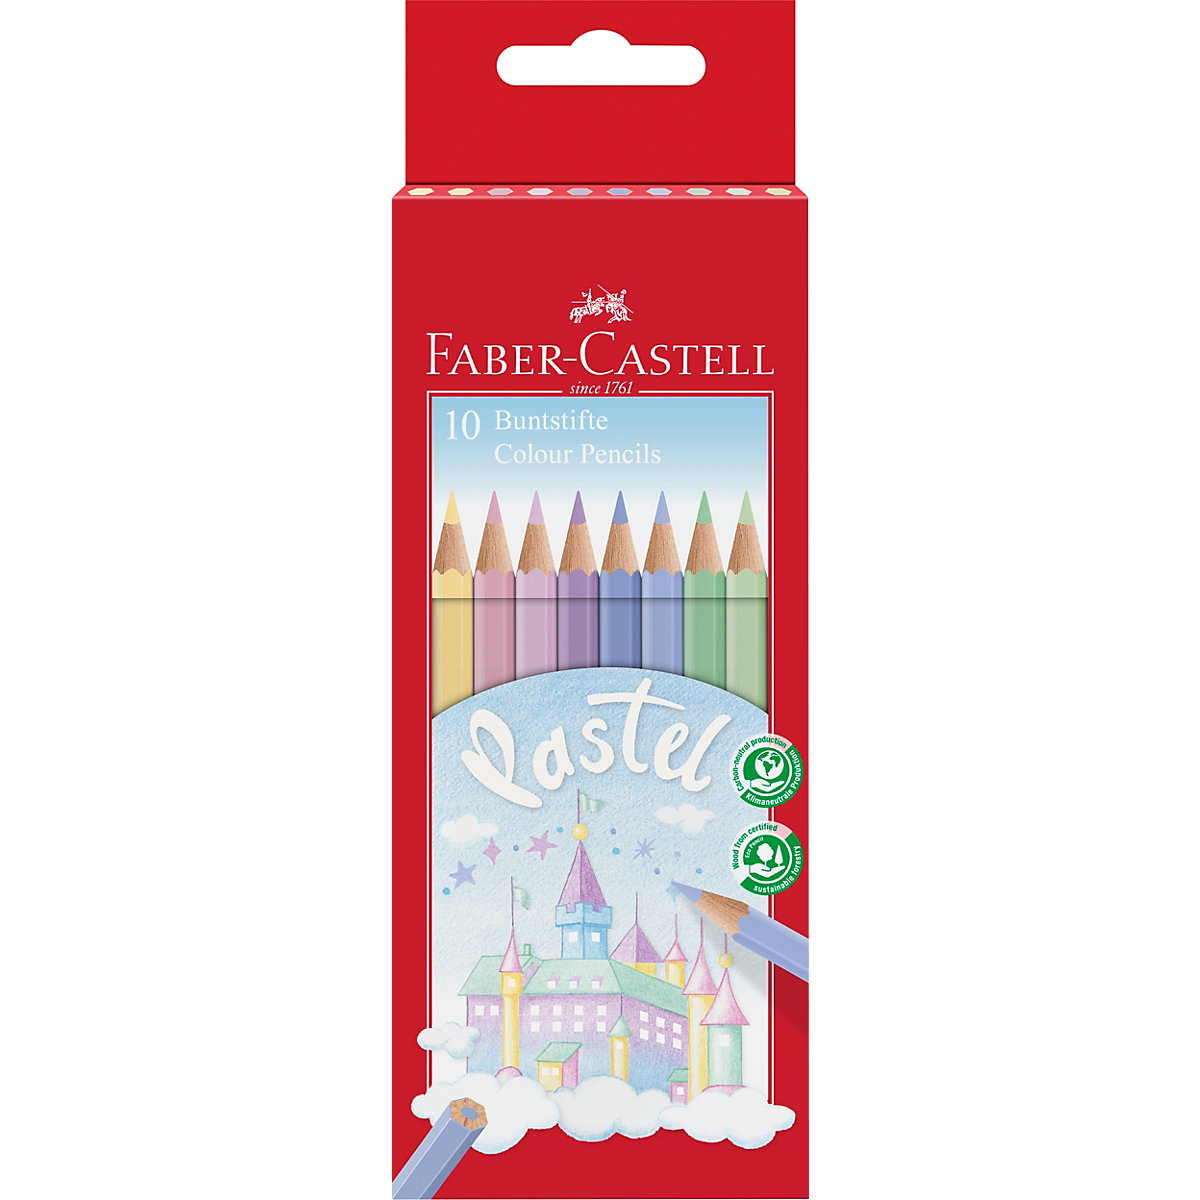 Faber-Castell Sechskant-Buntstifte Pastell 10 Farben